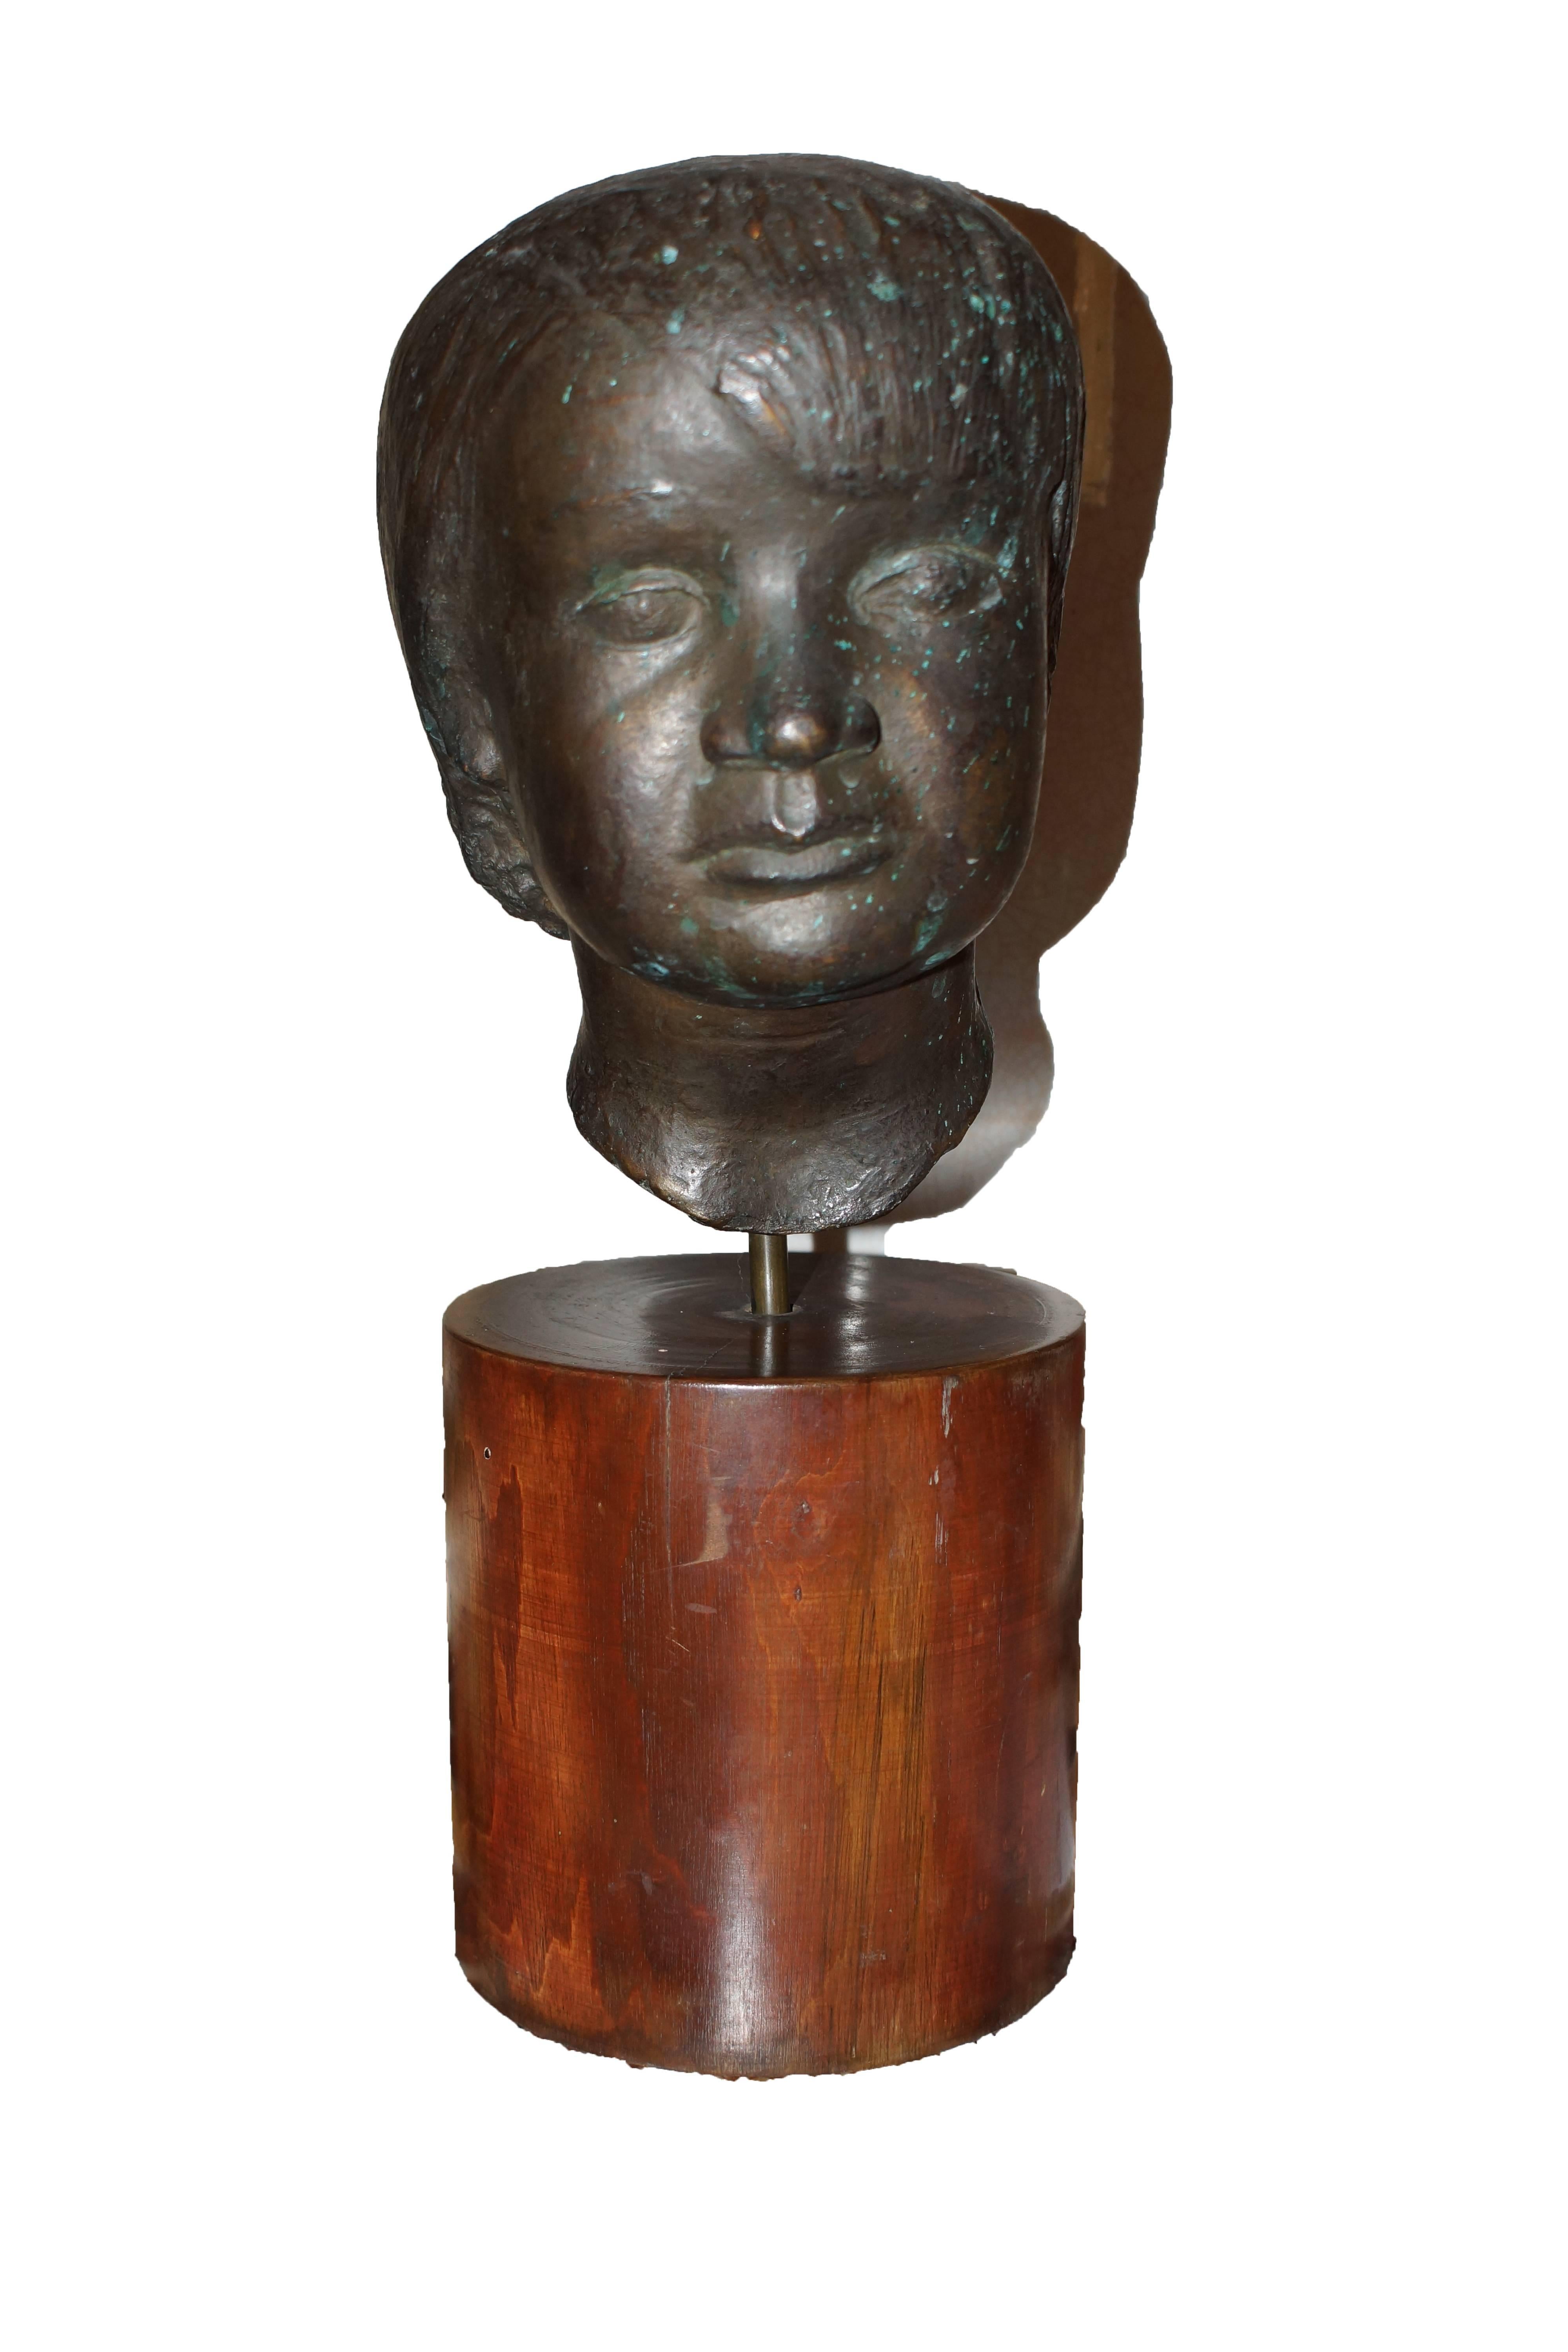 Marino Marini Figurative Sculpture - Head of Young Boy